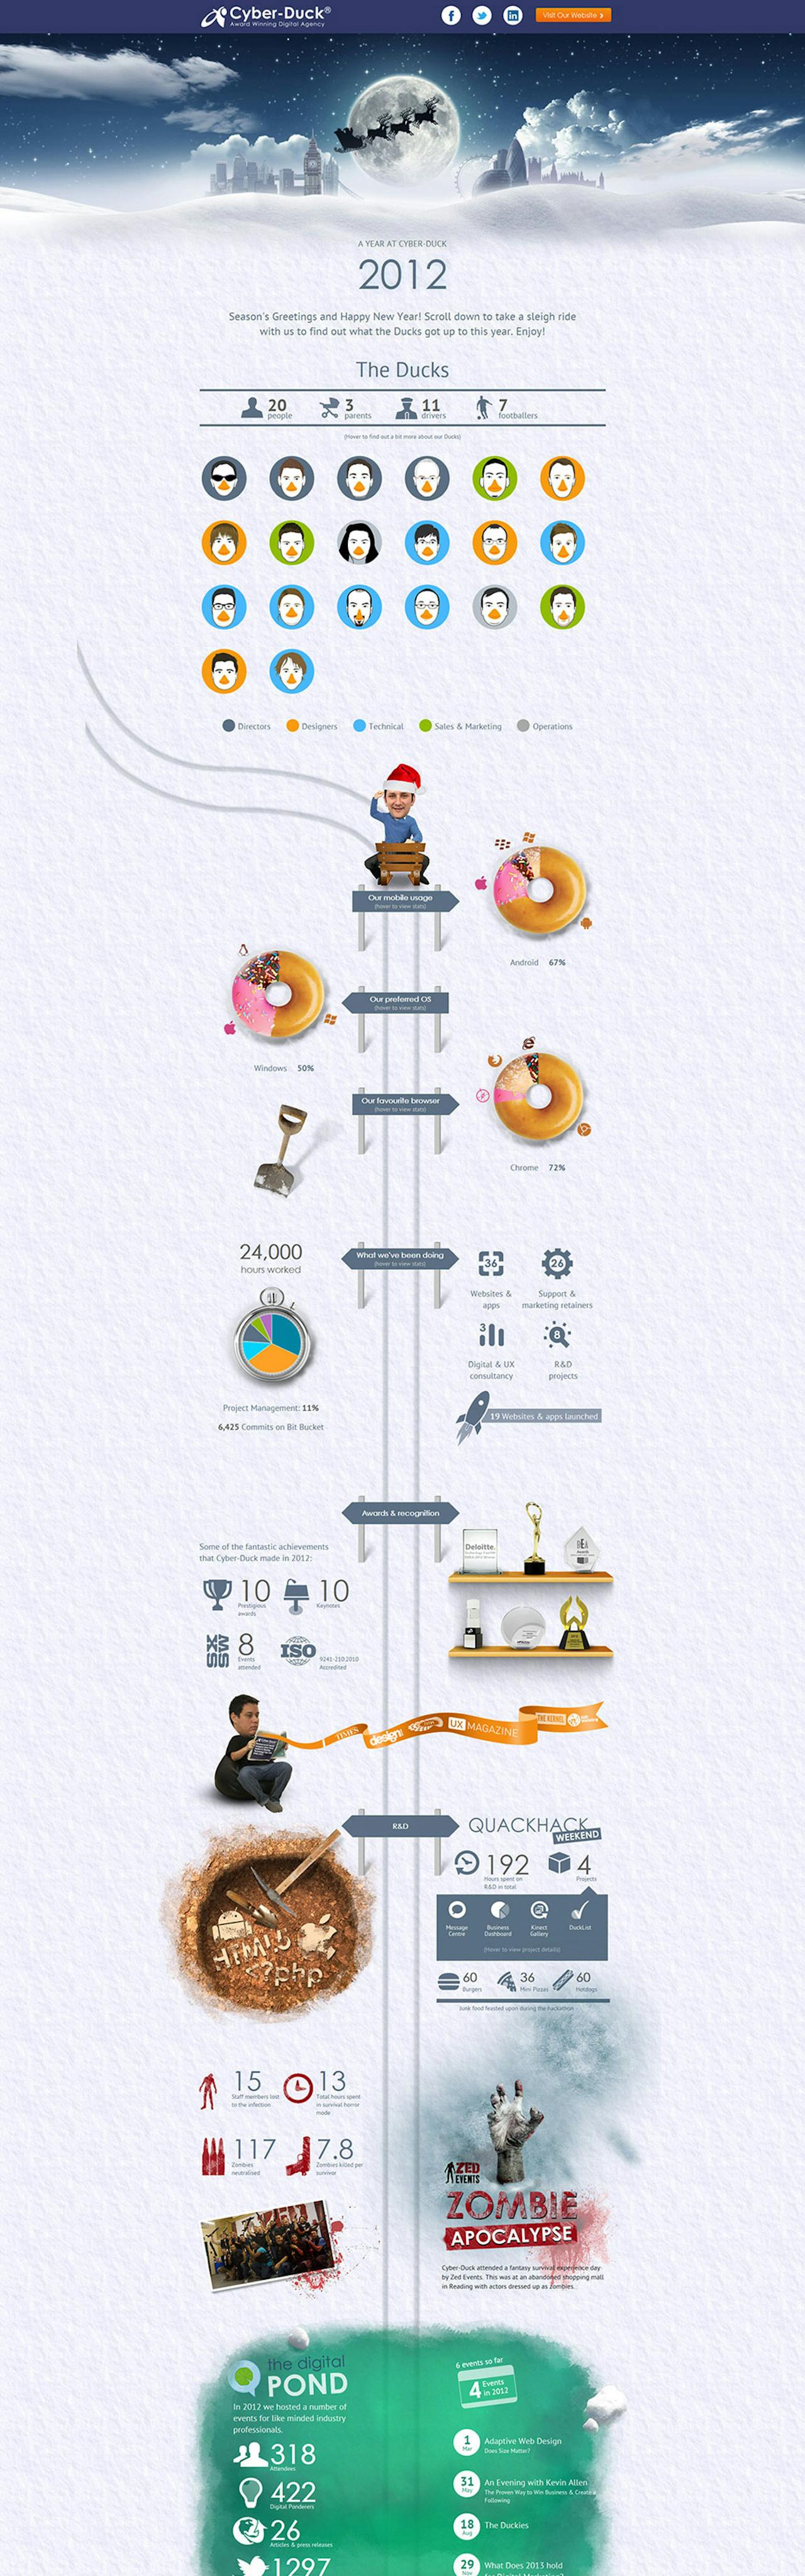 Cyber-Duck Christmas Infographic 2012 Website Screenshot